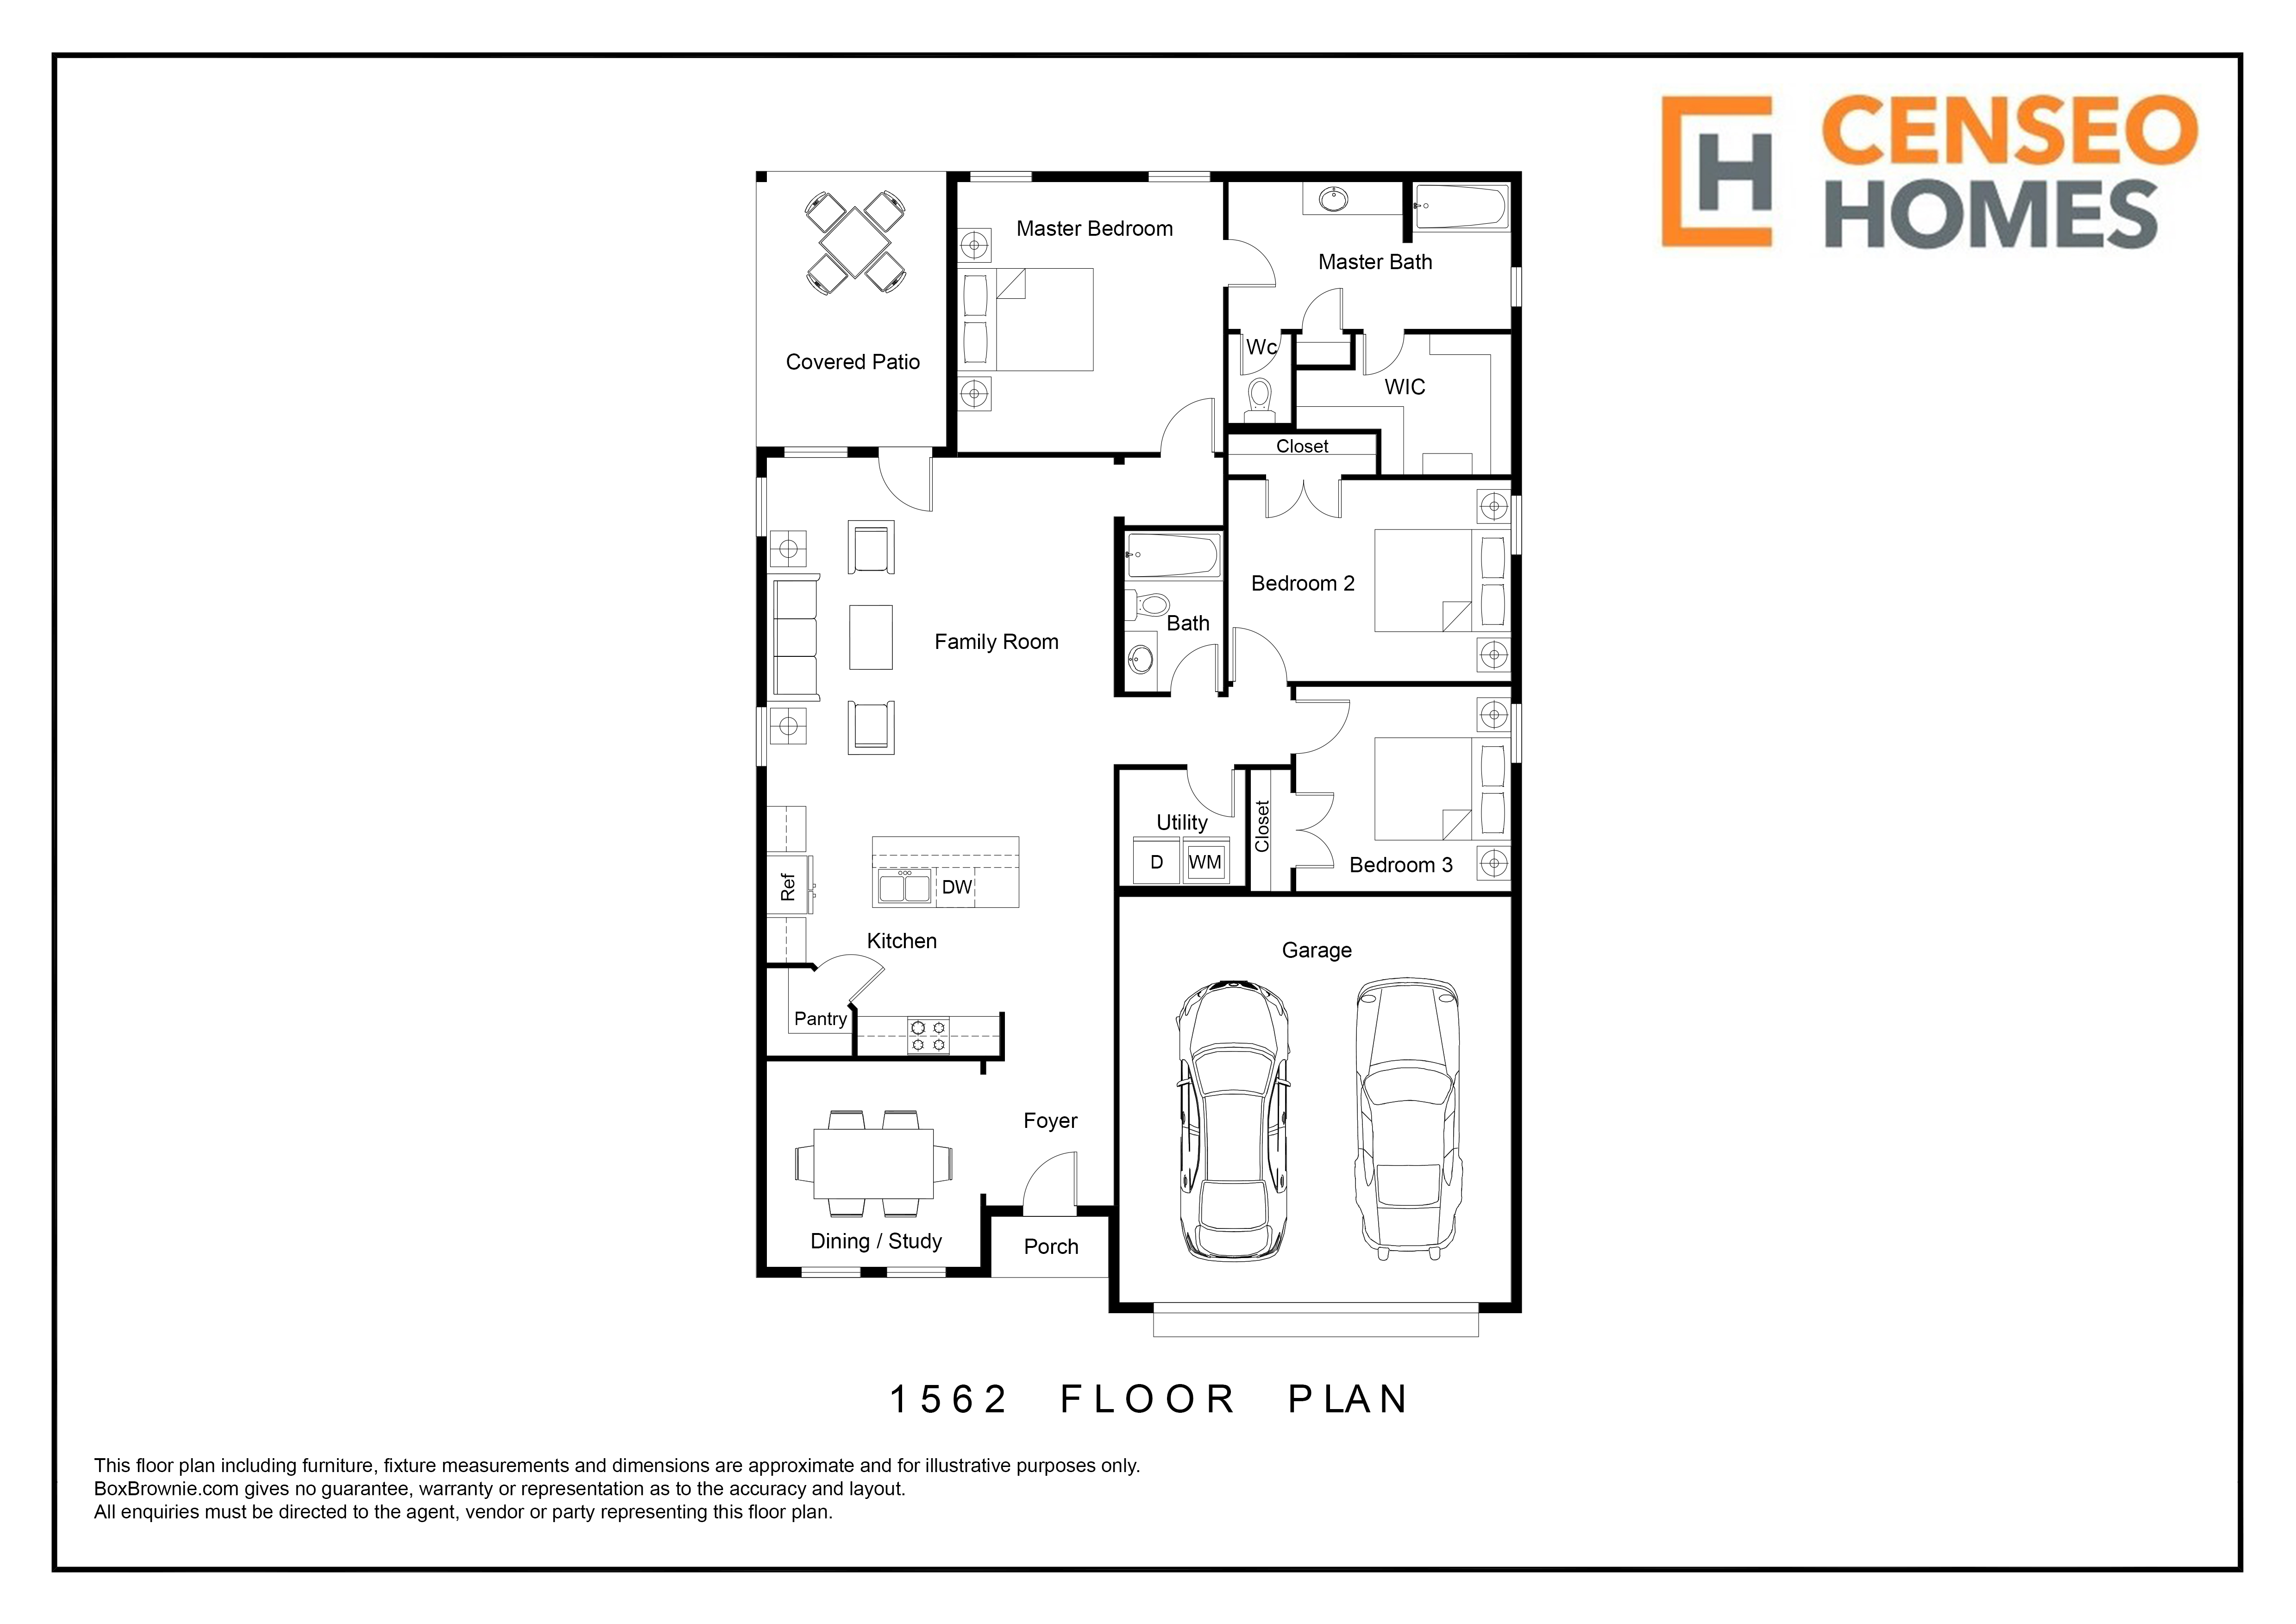 Floor plan showcasing a brand new home design